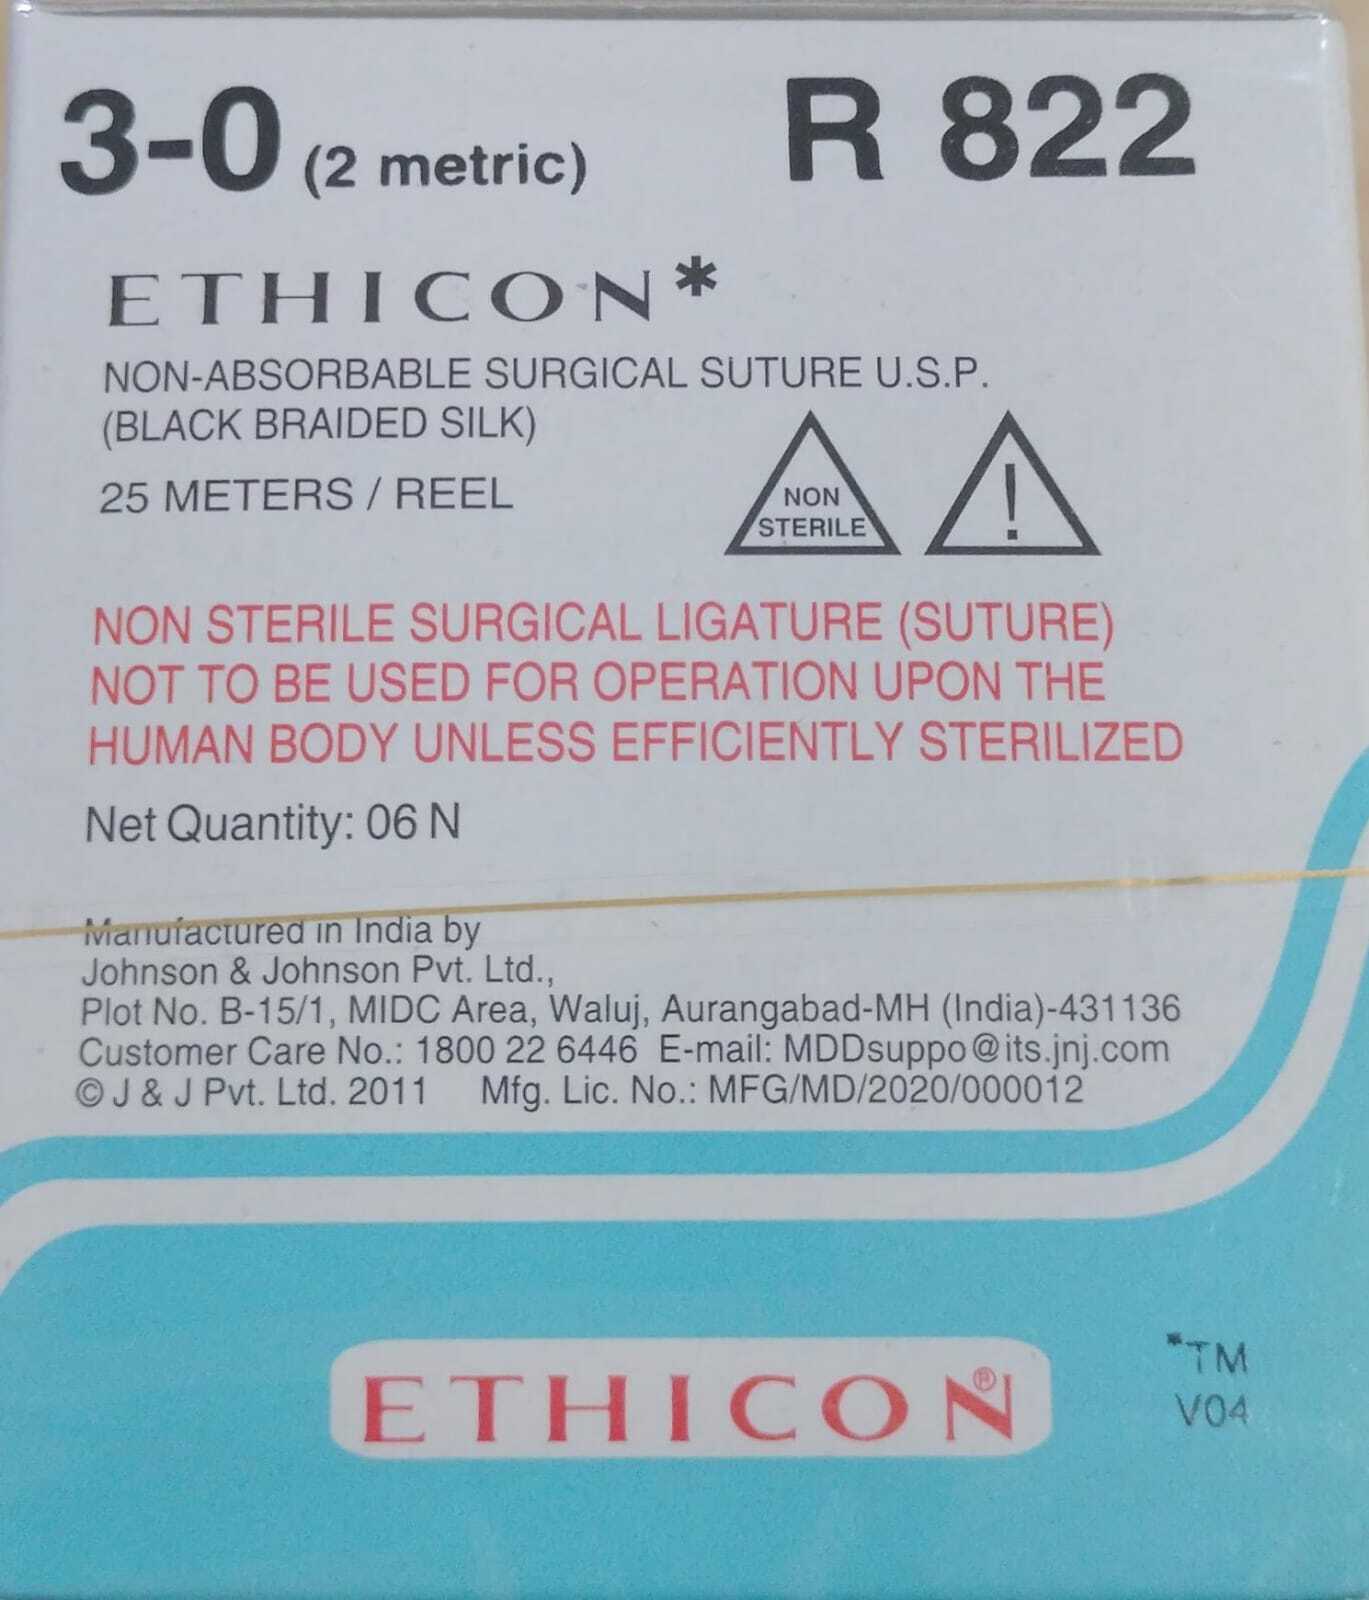 Ethicon Black Braided Silk Reels - Non Sterile (R822)